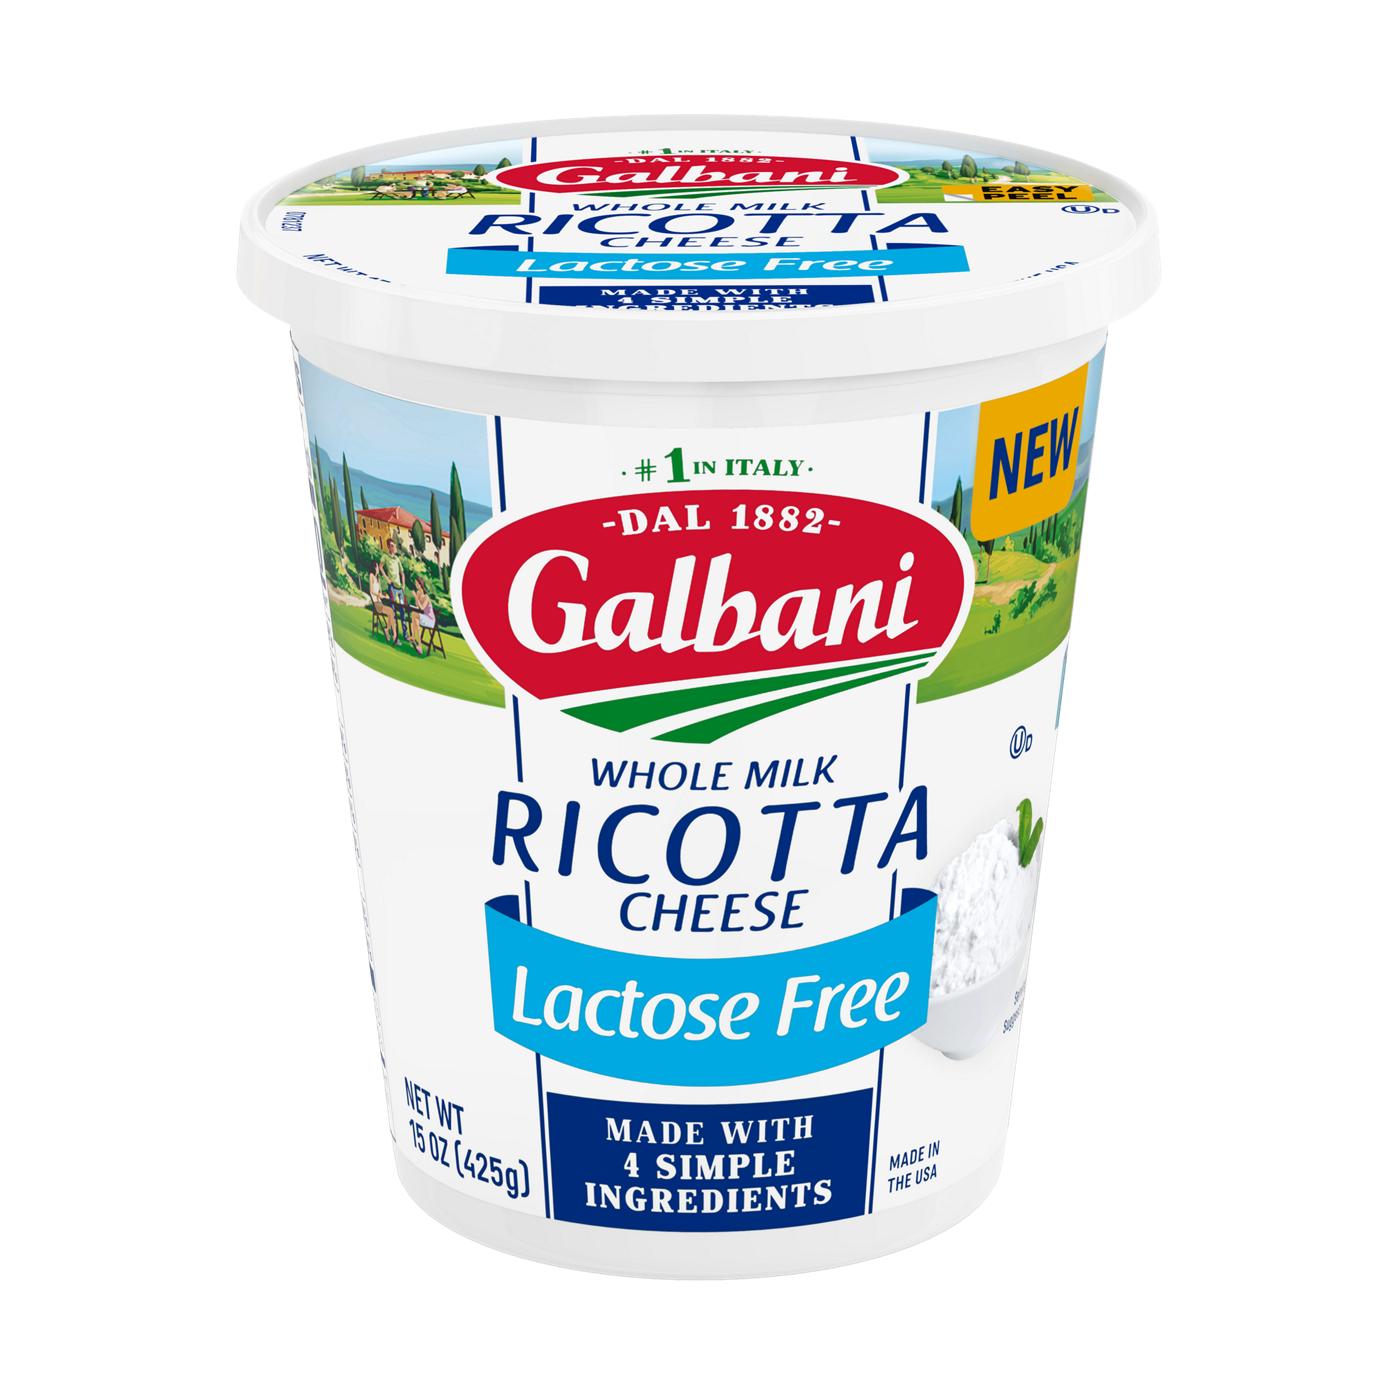 Galbani Lactose Free Whole Milk Ricotta Cheese; image 1 of 3